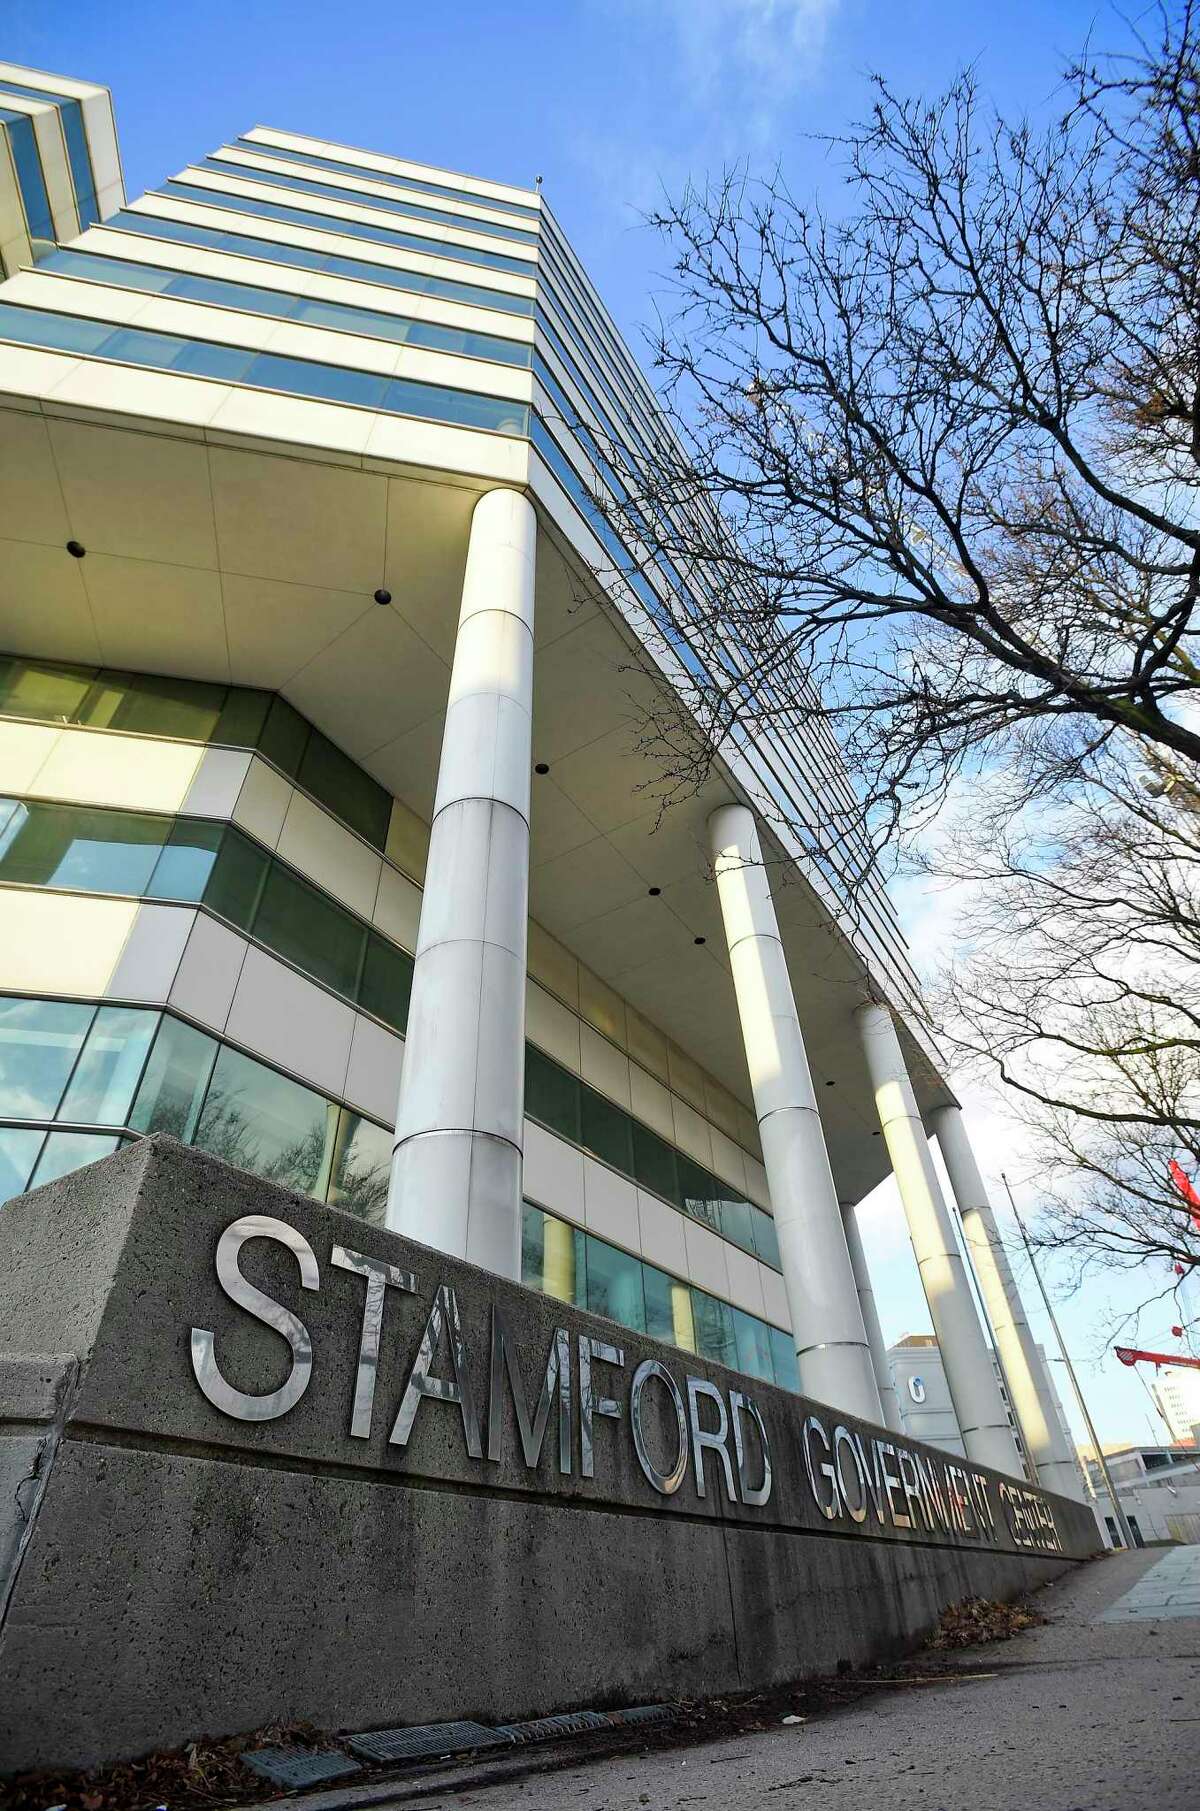 Stamford Government Center